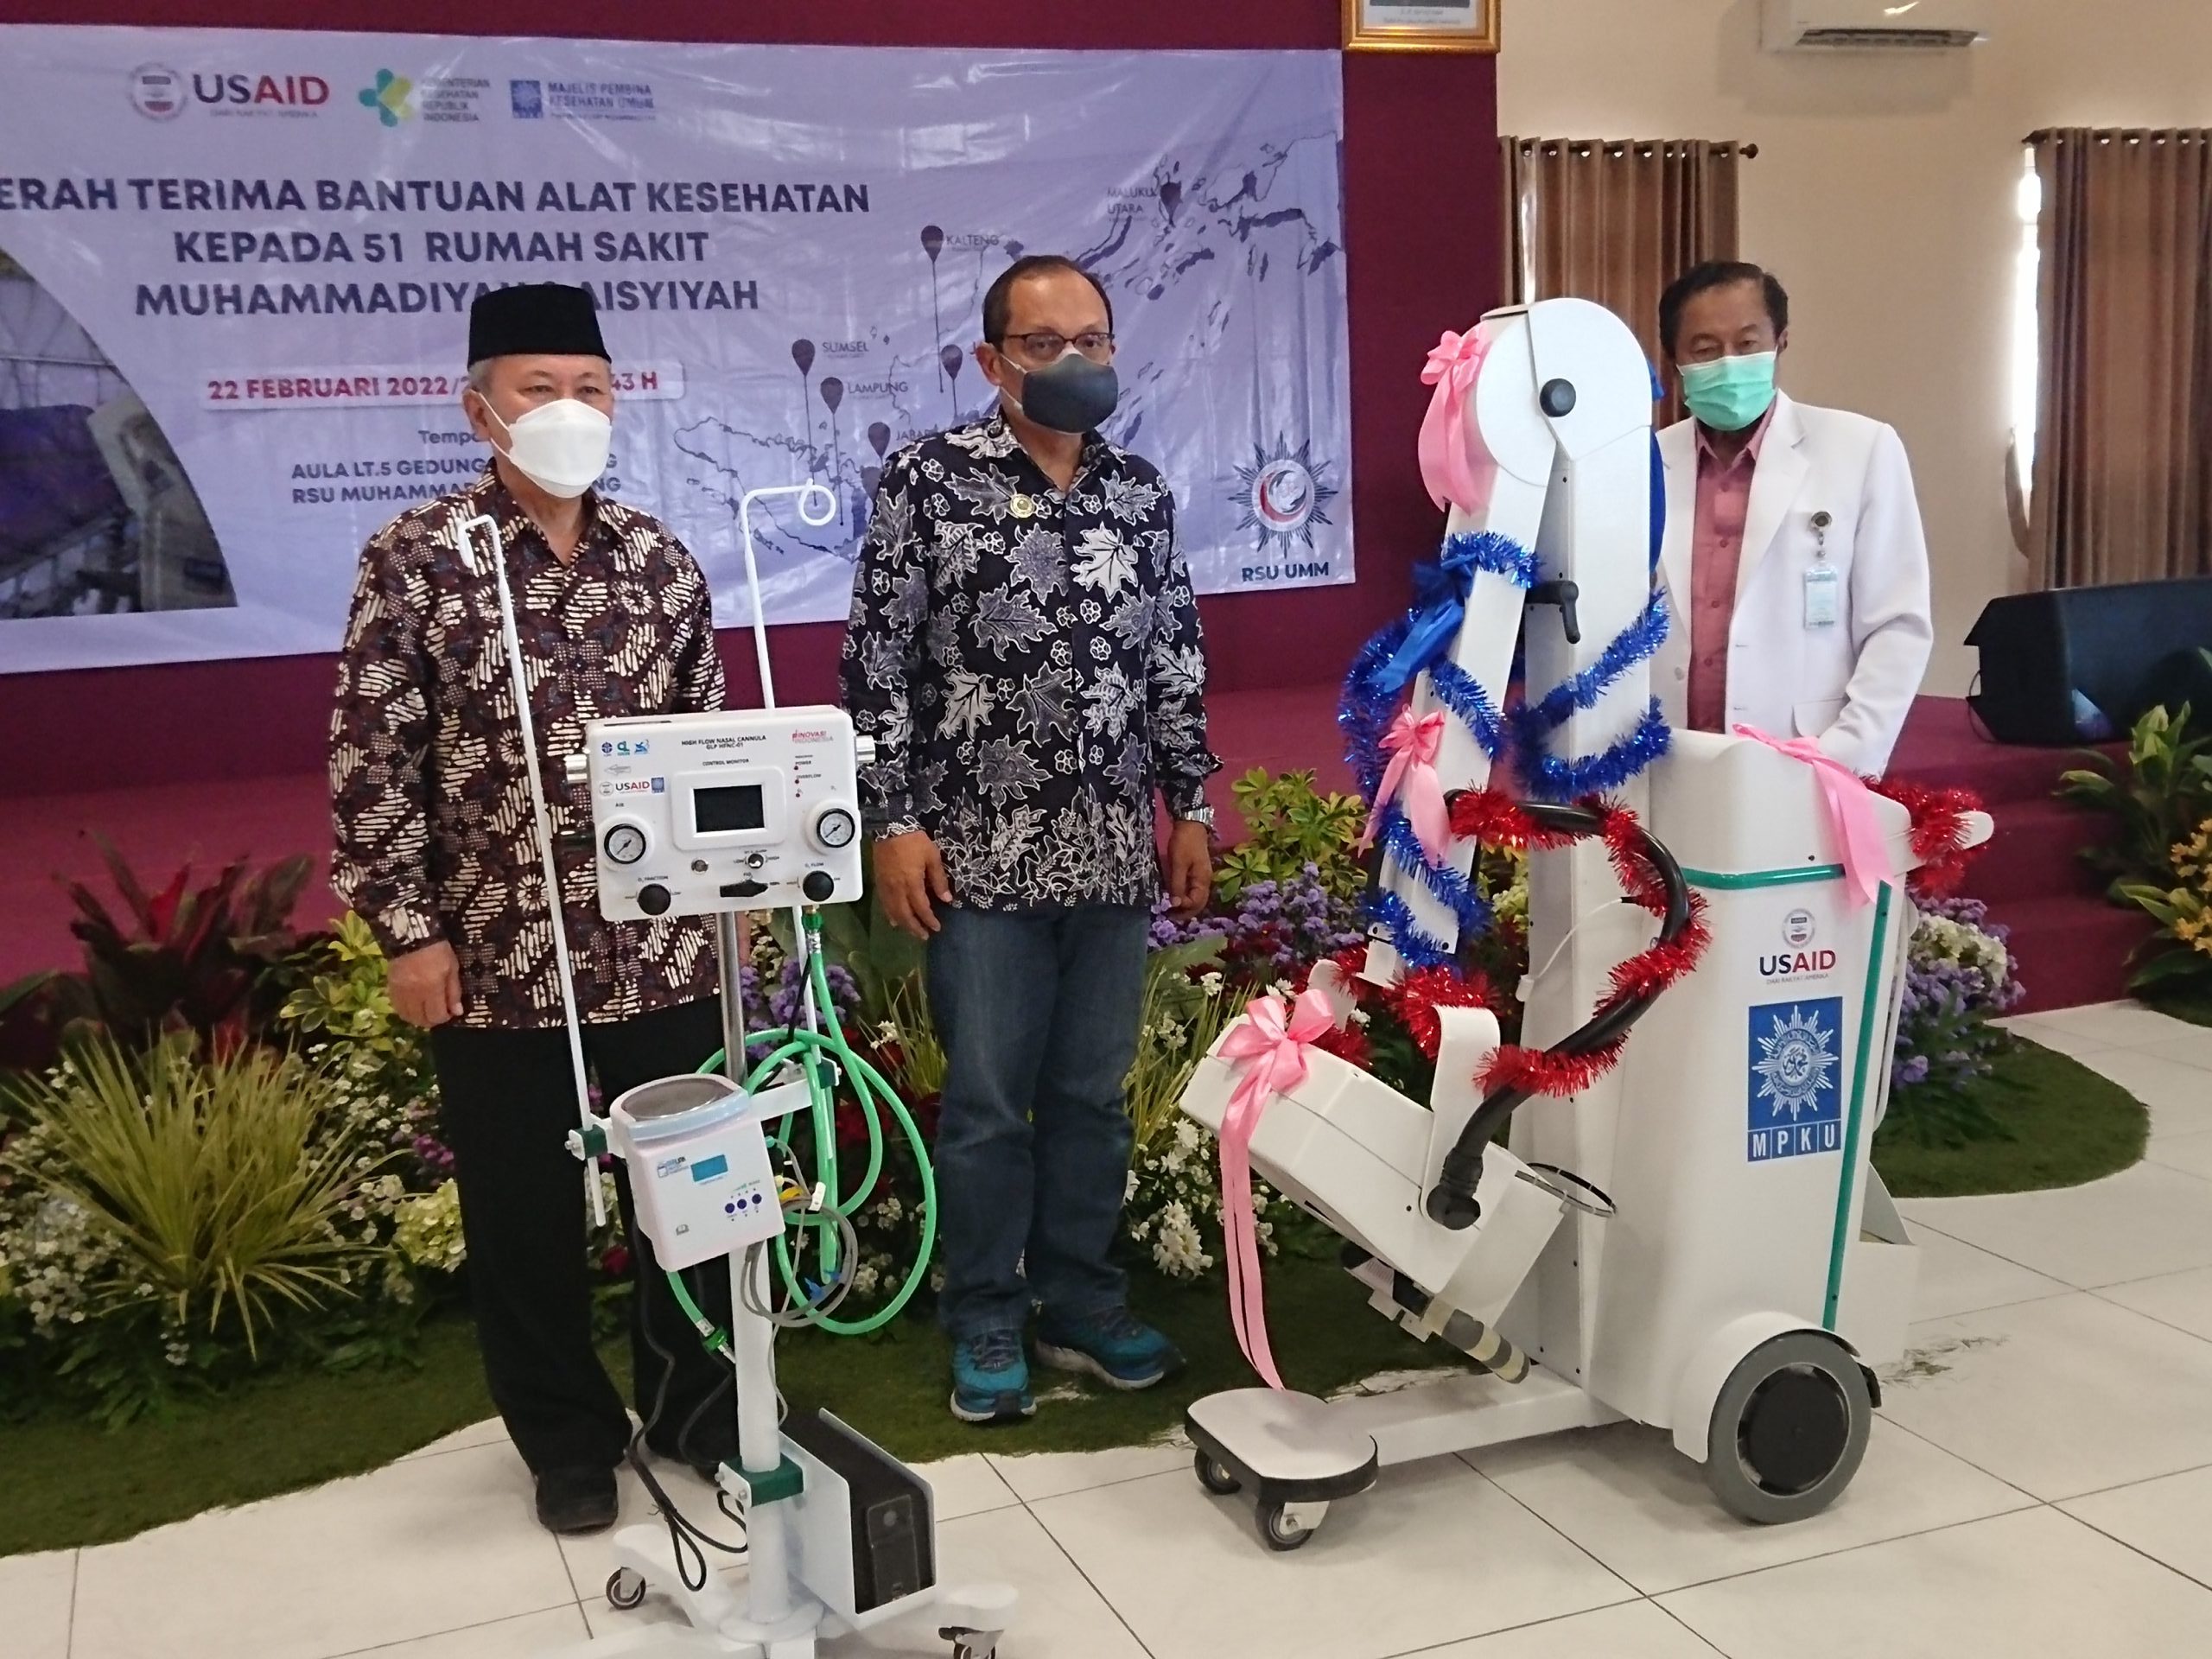 Muhammadiyah Terima Bantuan Alat Kesehatan Penanganan Covid-19 dan TBC dari USAID